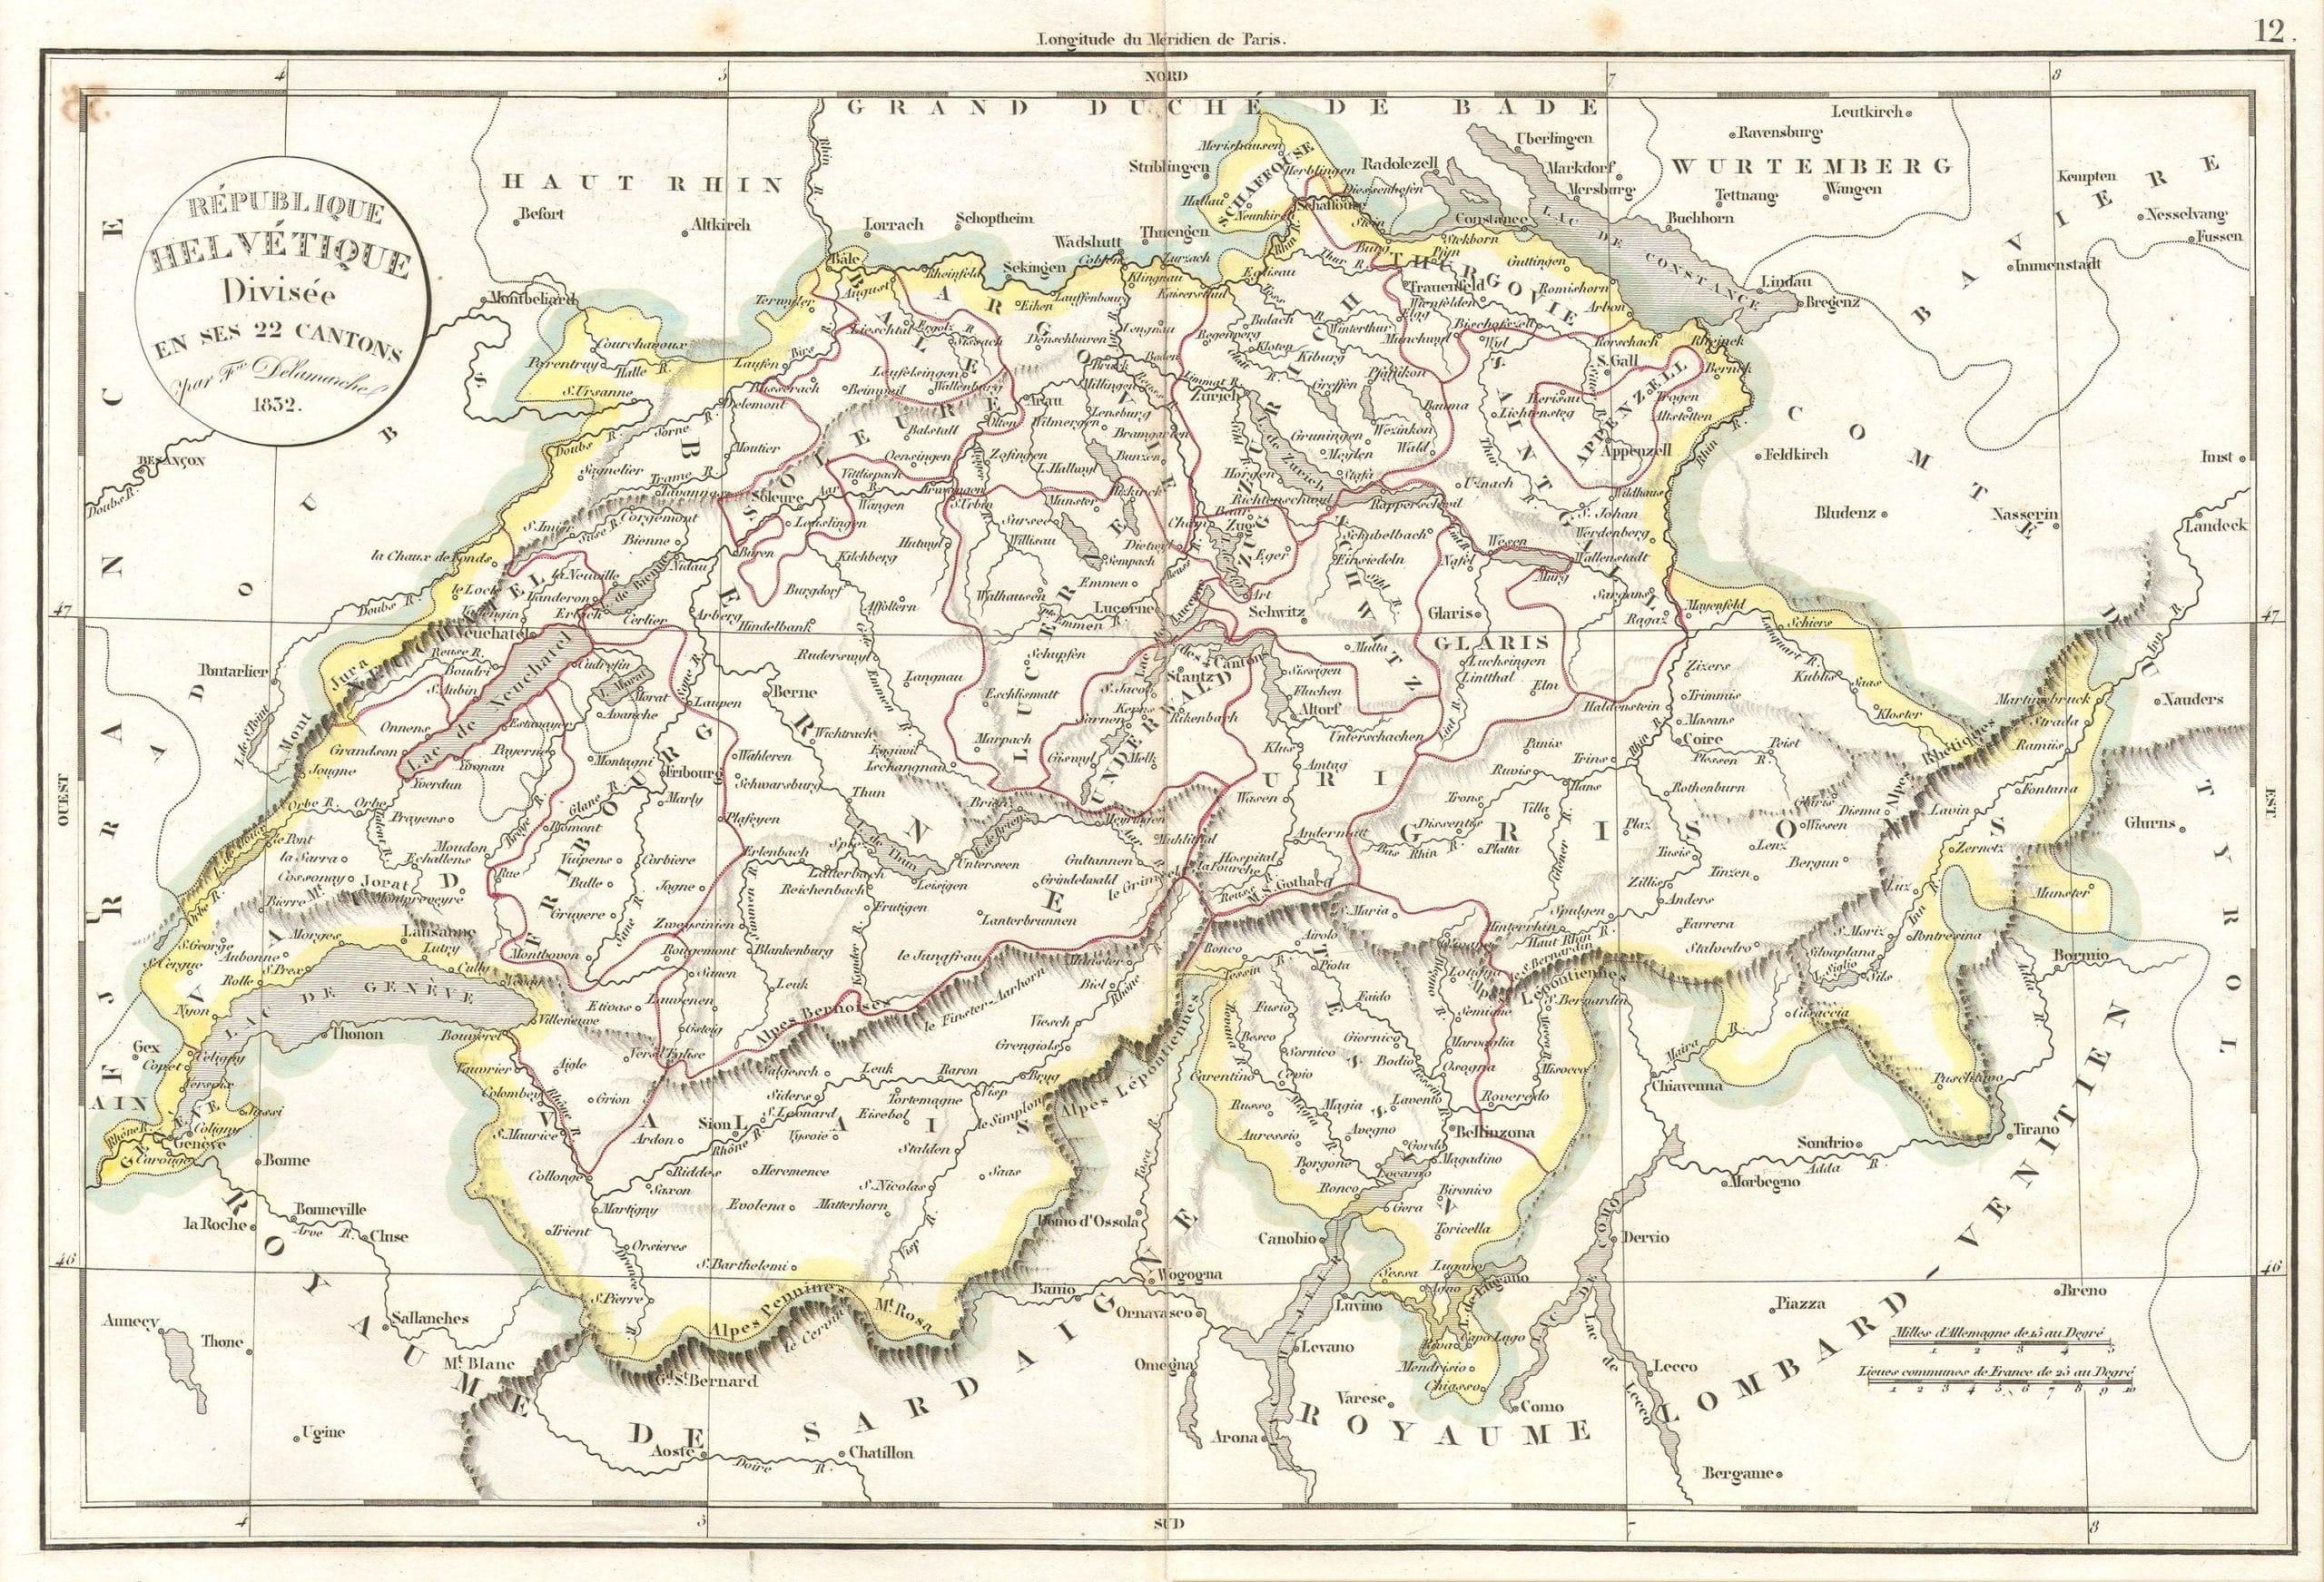 1832_Delamarche_Map_of_Switzerland_-_Geographicus_-_Switzerland-d-32